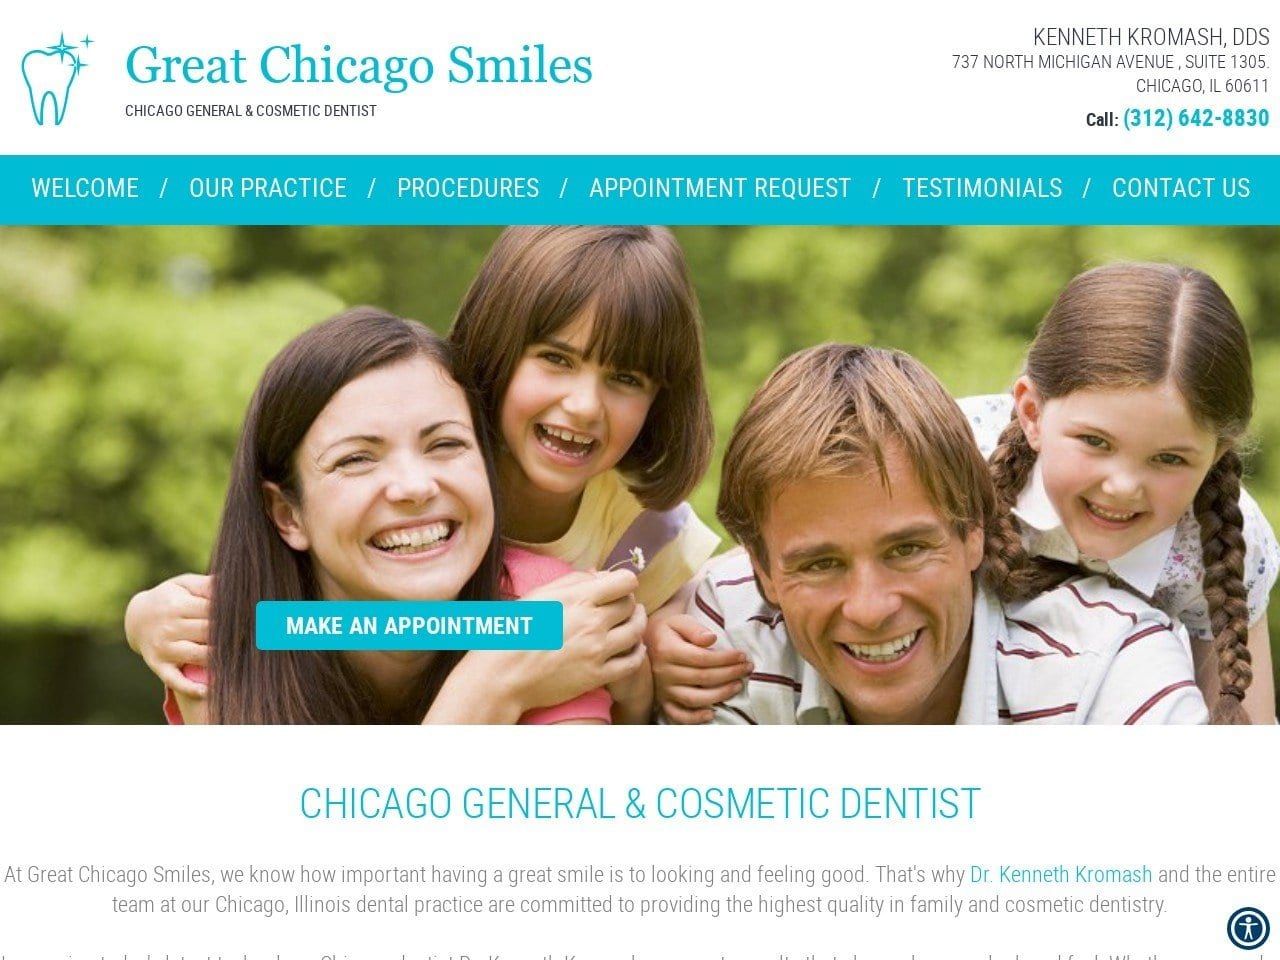 Great Chicago Smiles Website Screenshot from greatchicagosmiles.com